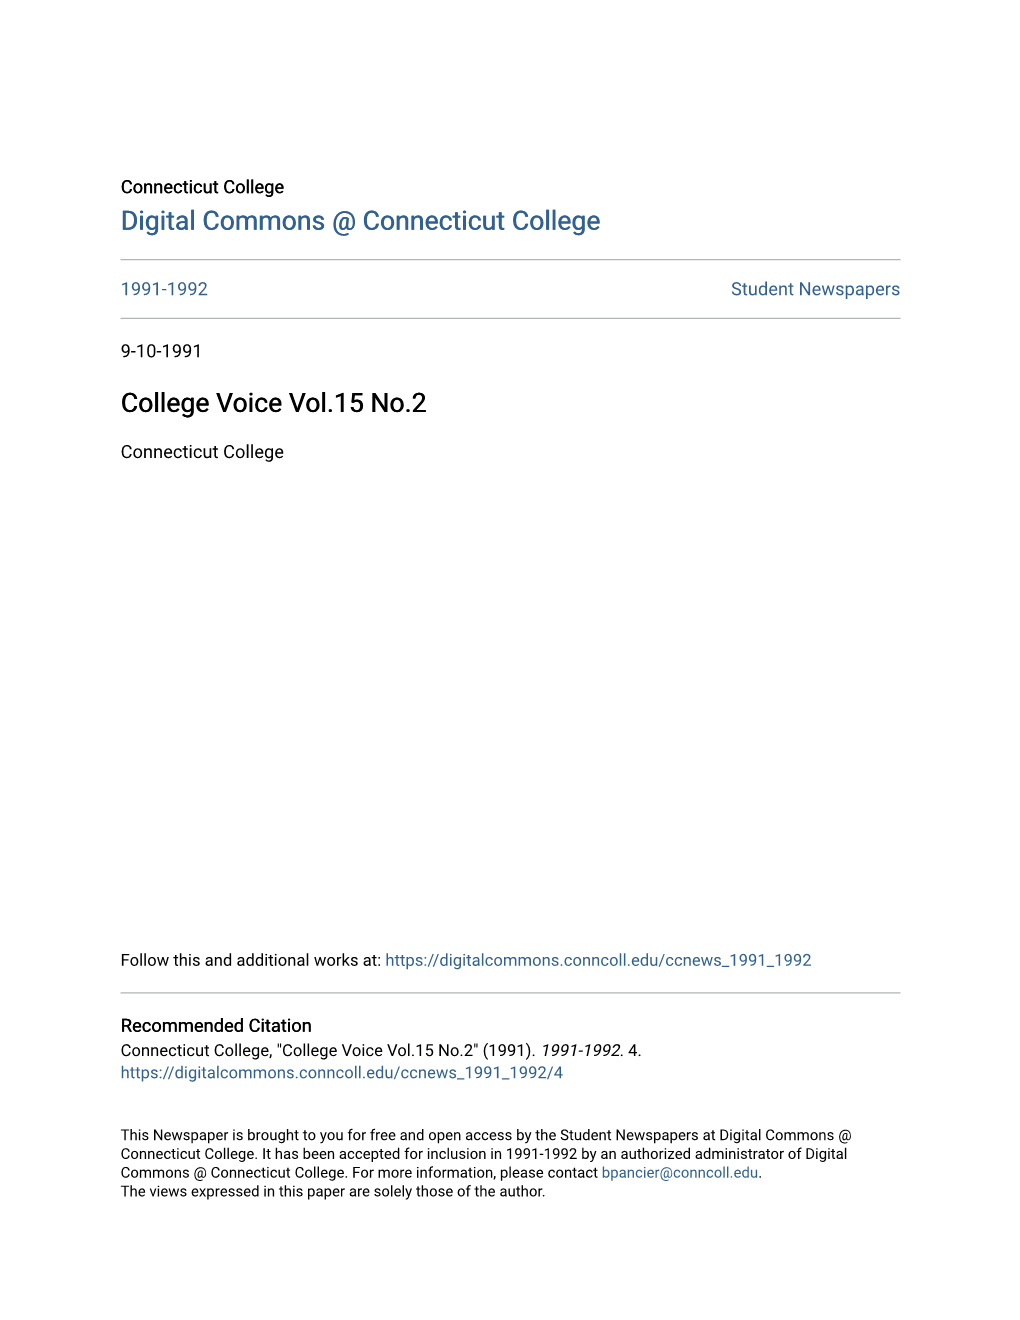 College Voice Vol.15 No.2